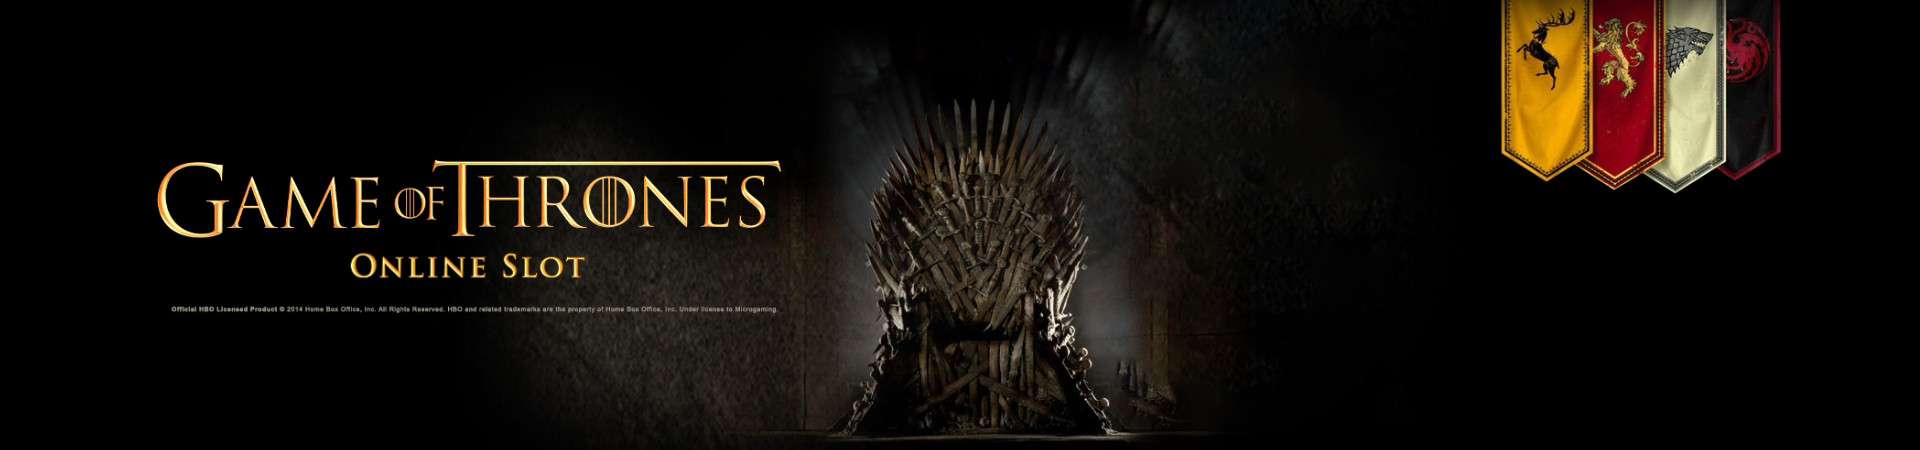 Game of thrones header banner